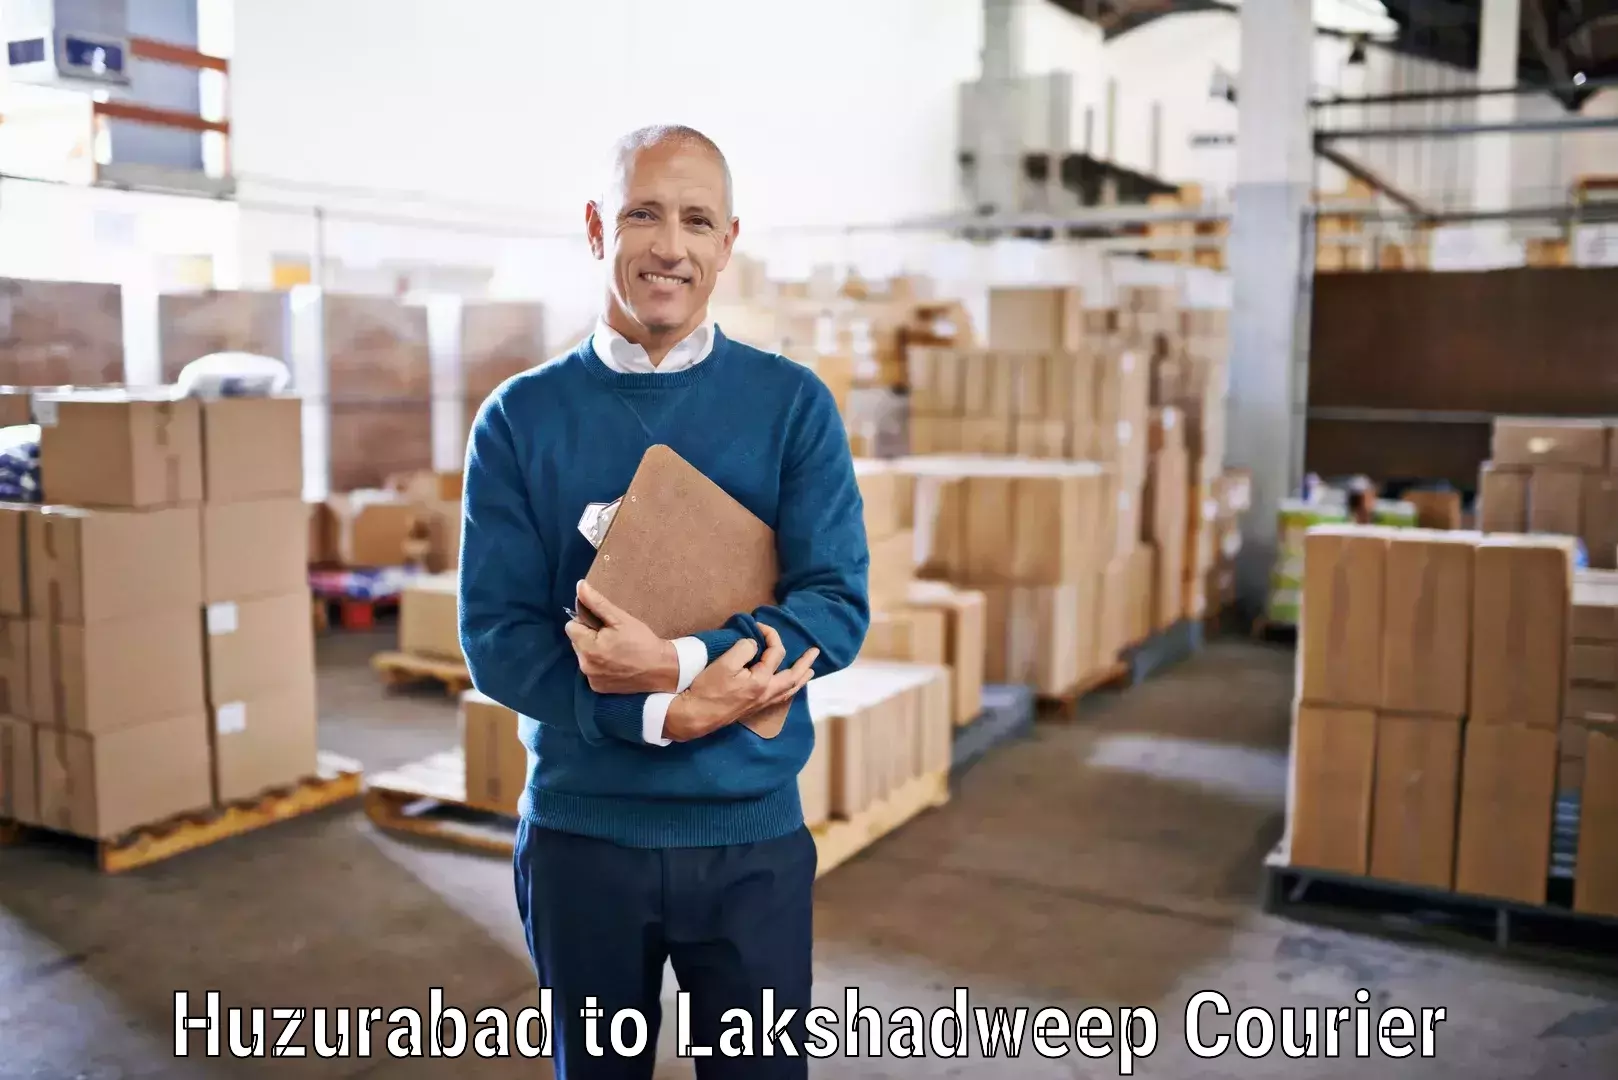 Customer-focused courier Huzurabad to Lakshadweep